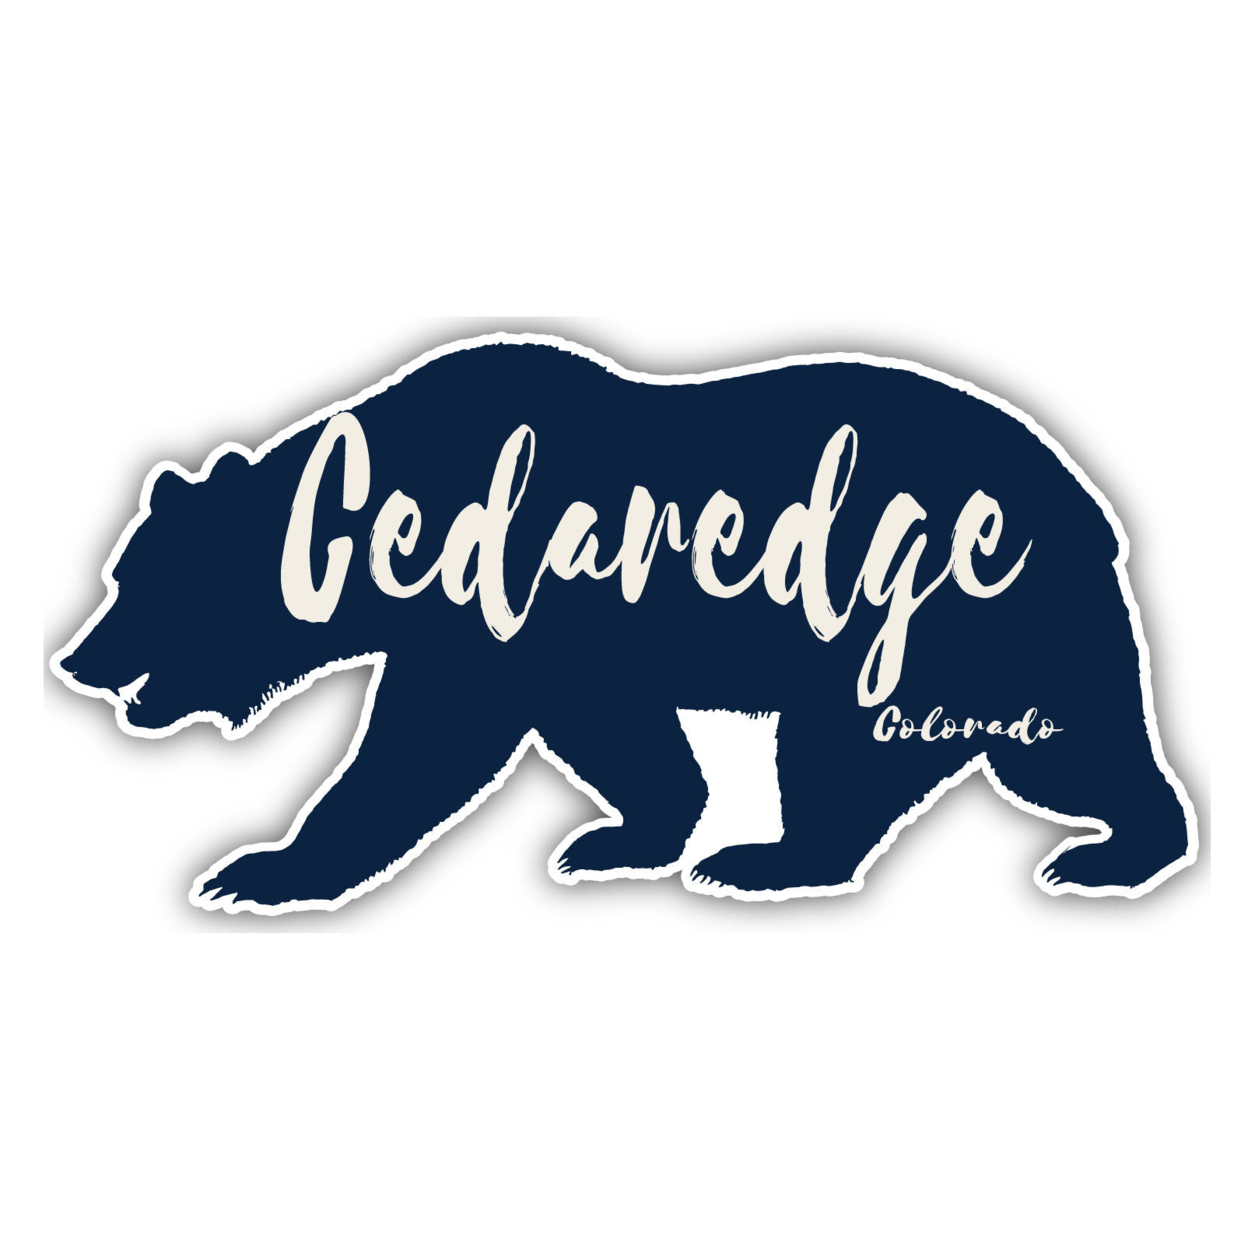 Cedaredge Colorado Souvenir Decorative Stickers (Choose Theme And Size) - Single Unit, 10-Inch, Bear